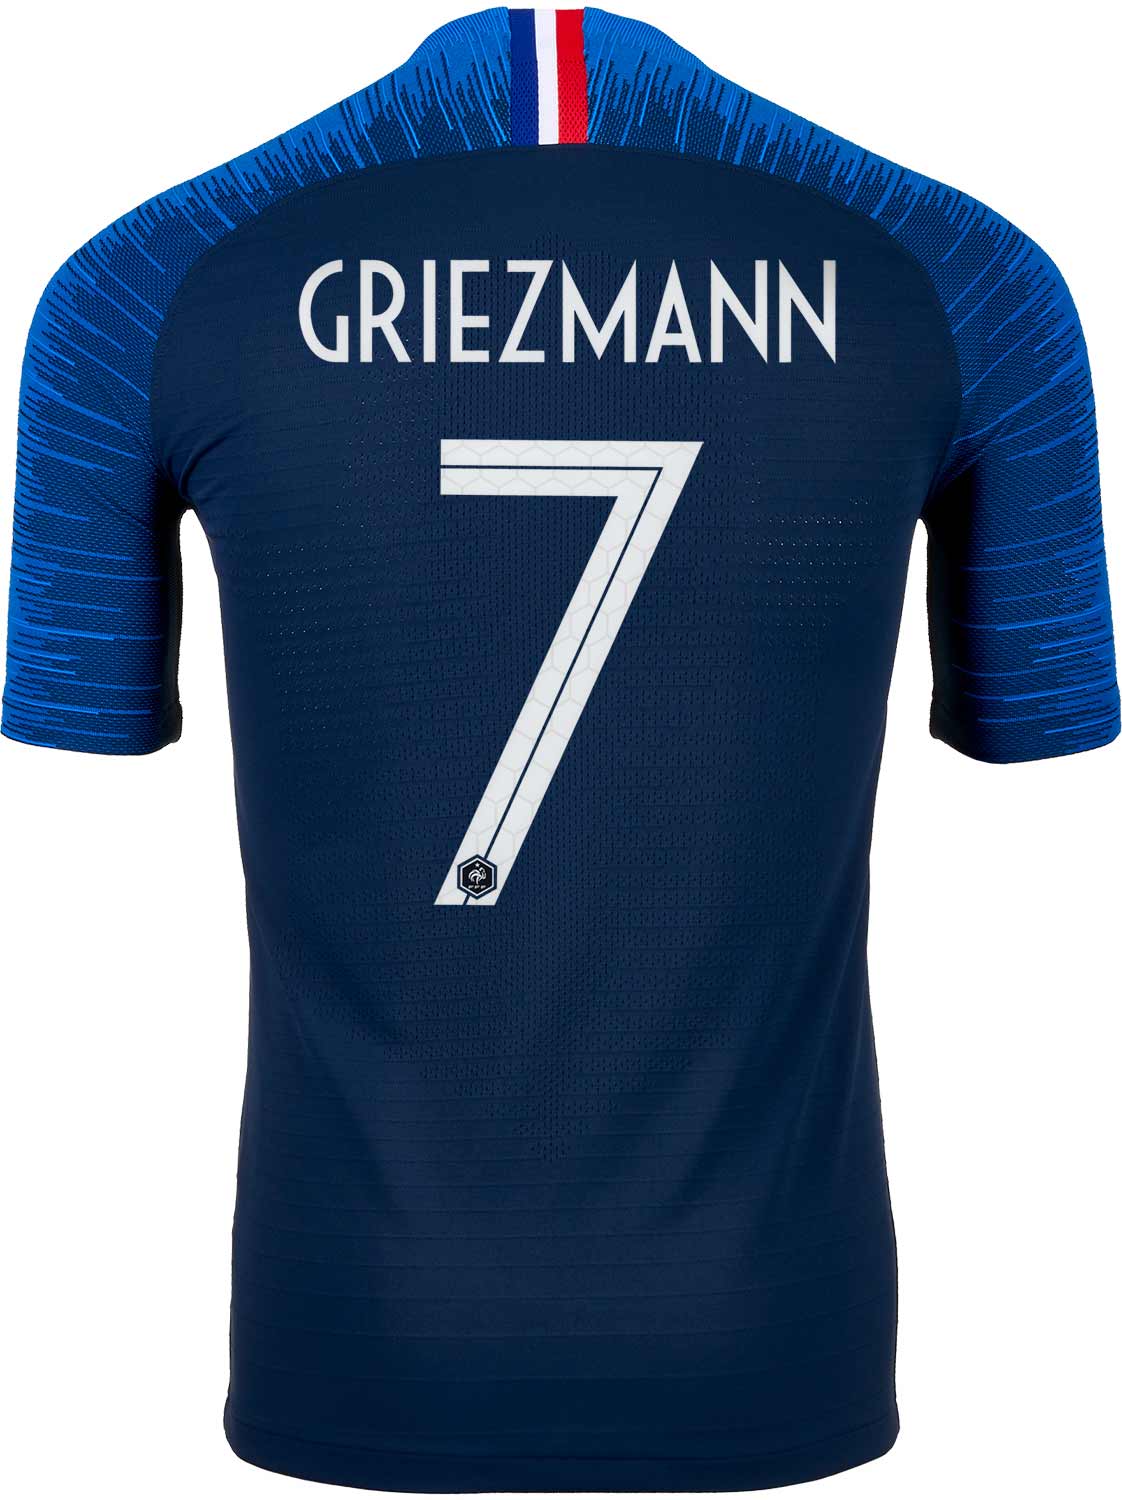 2018/19 Nike Antoine Griezmann France Home Match Jersey ...